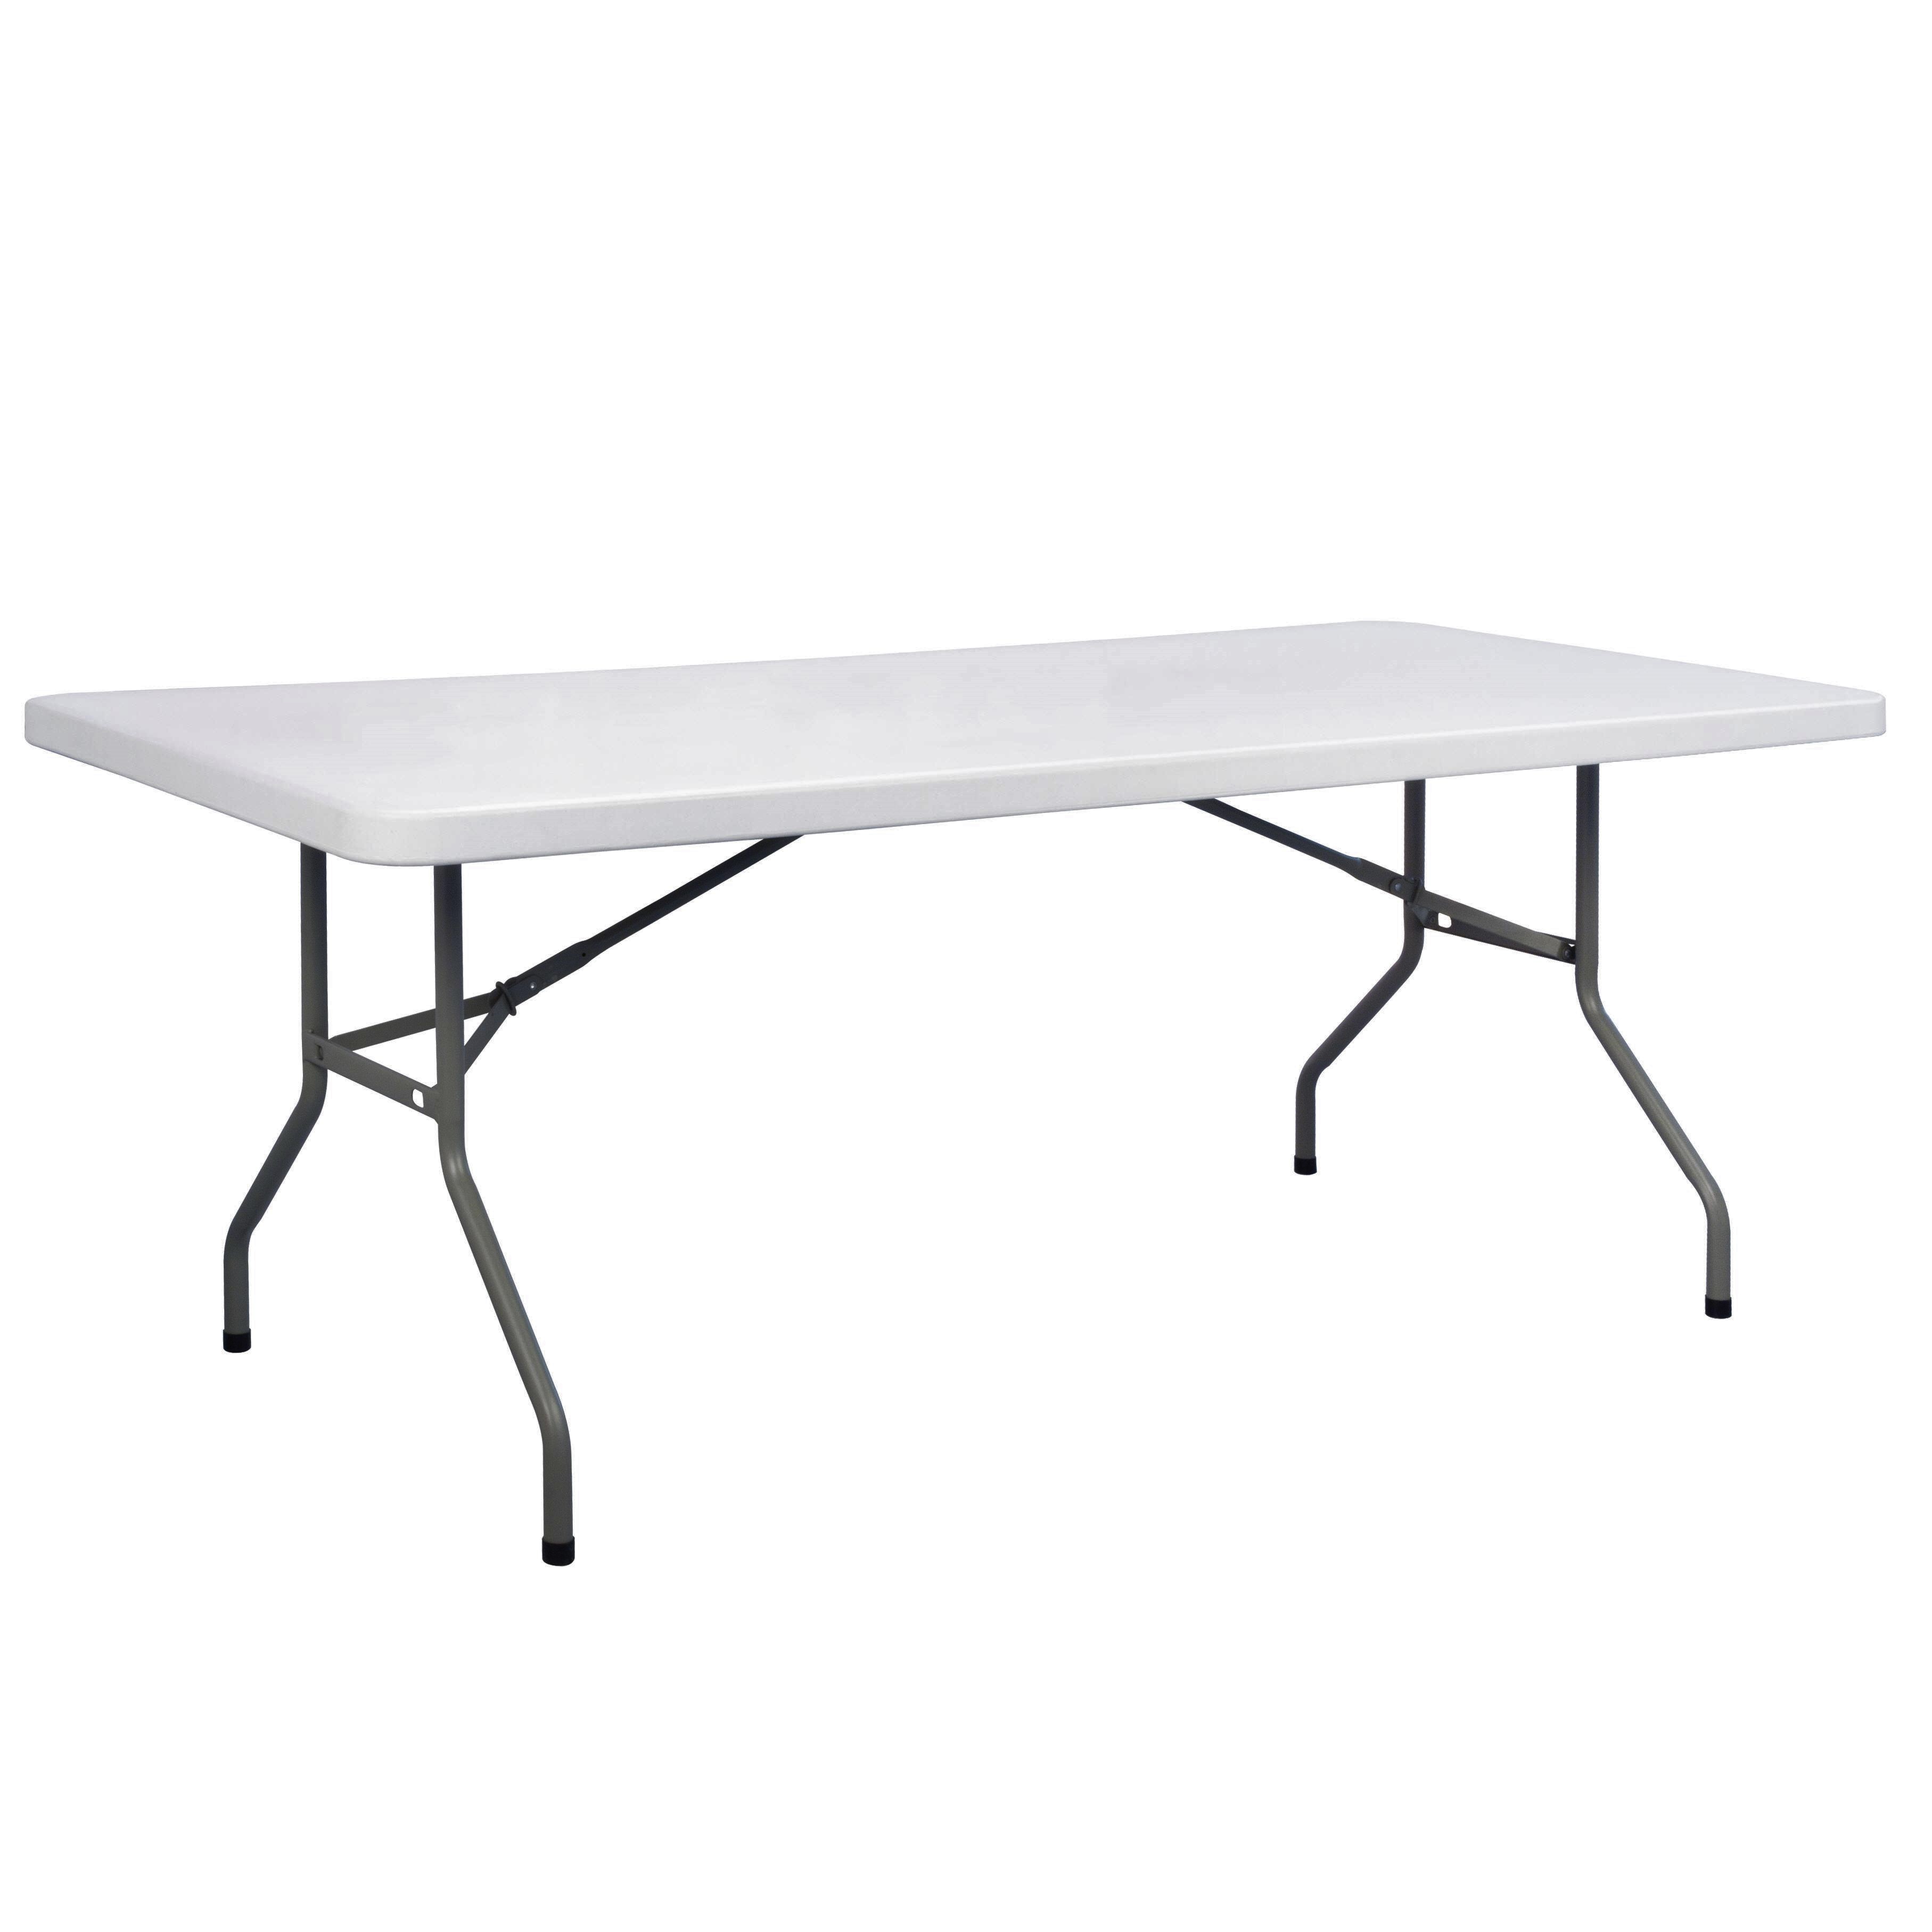 6,5ft Rectangular folding table 200x90cm / 10 people